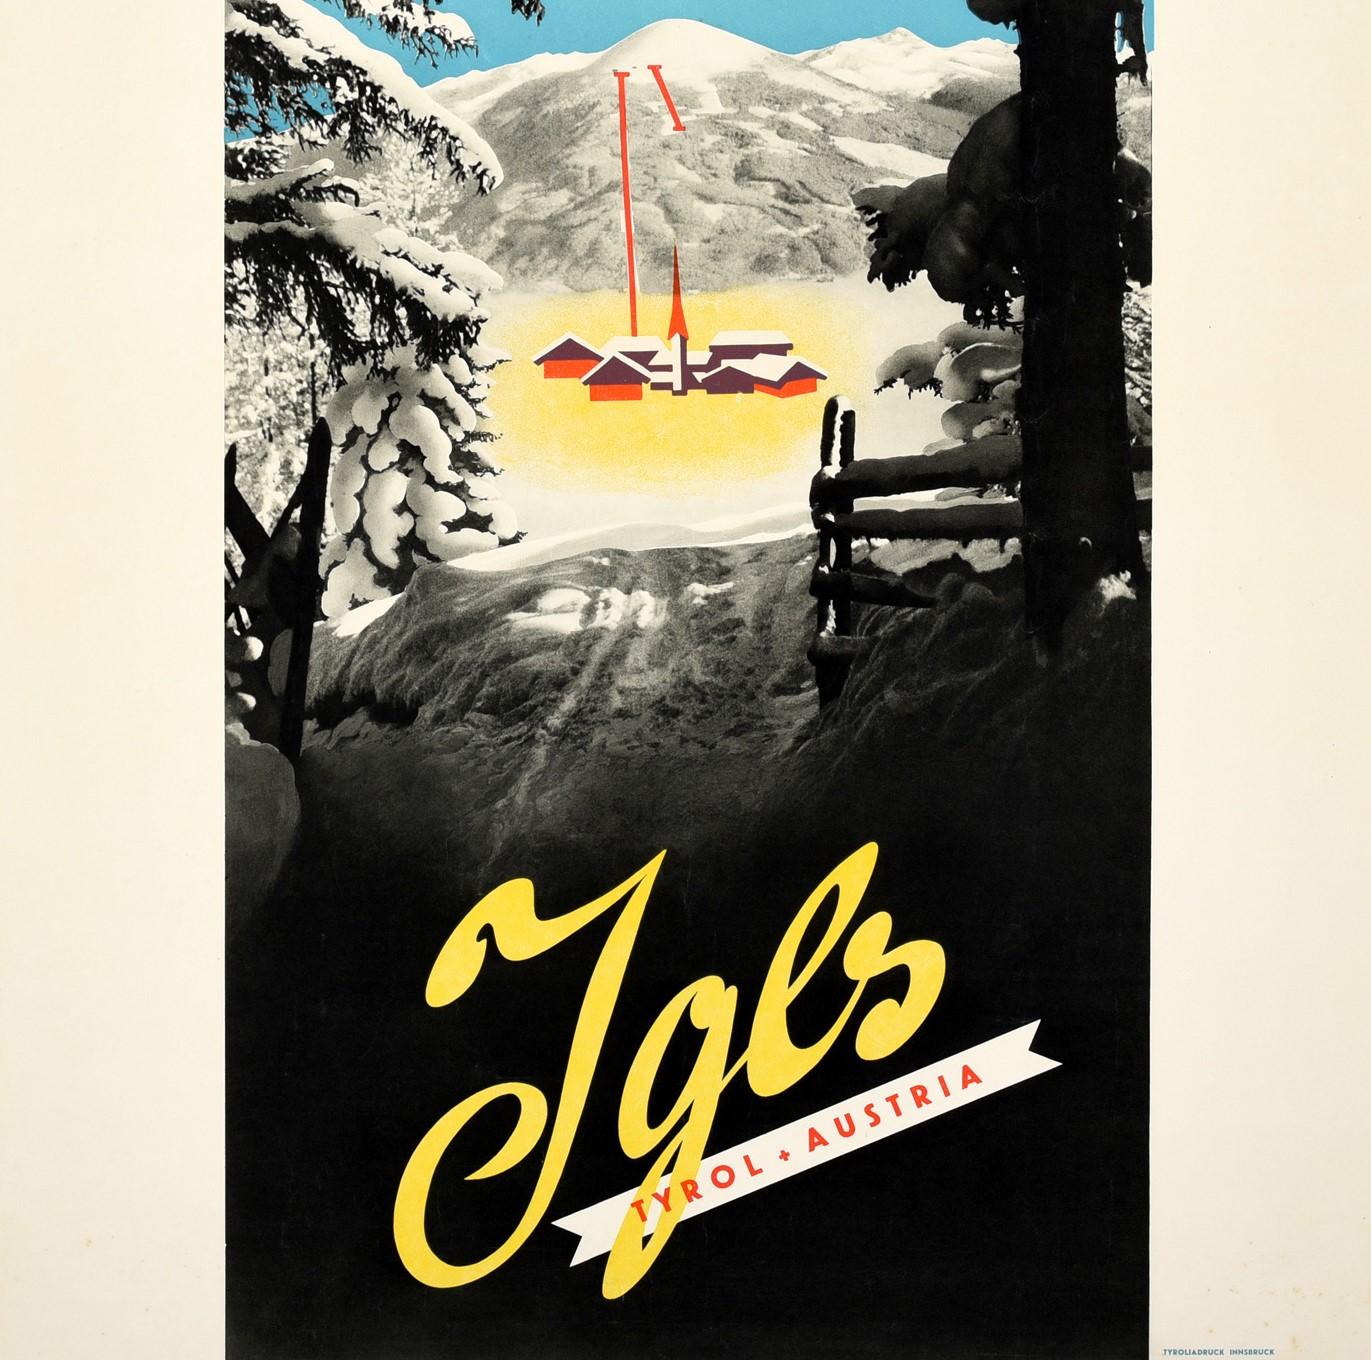 Austrian Original Vintage Poster For Igls Tyrol Austria Winter Sport Skiing Mountain Alps For Sale